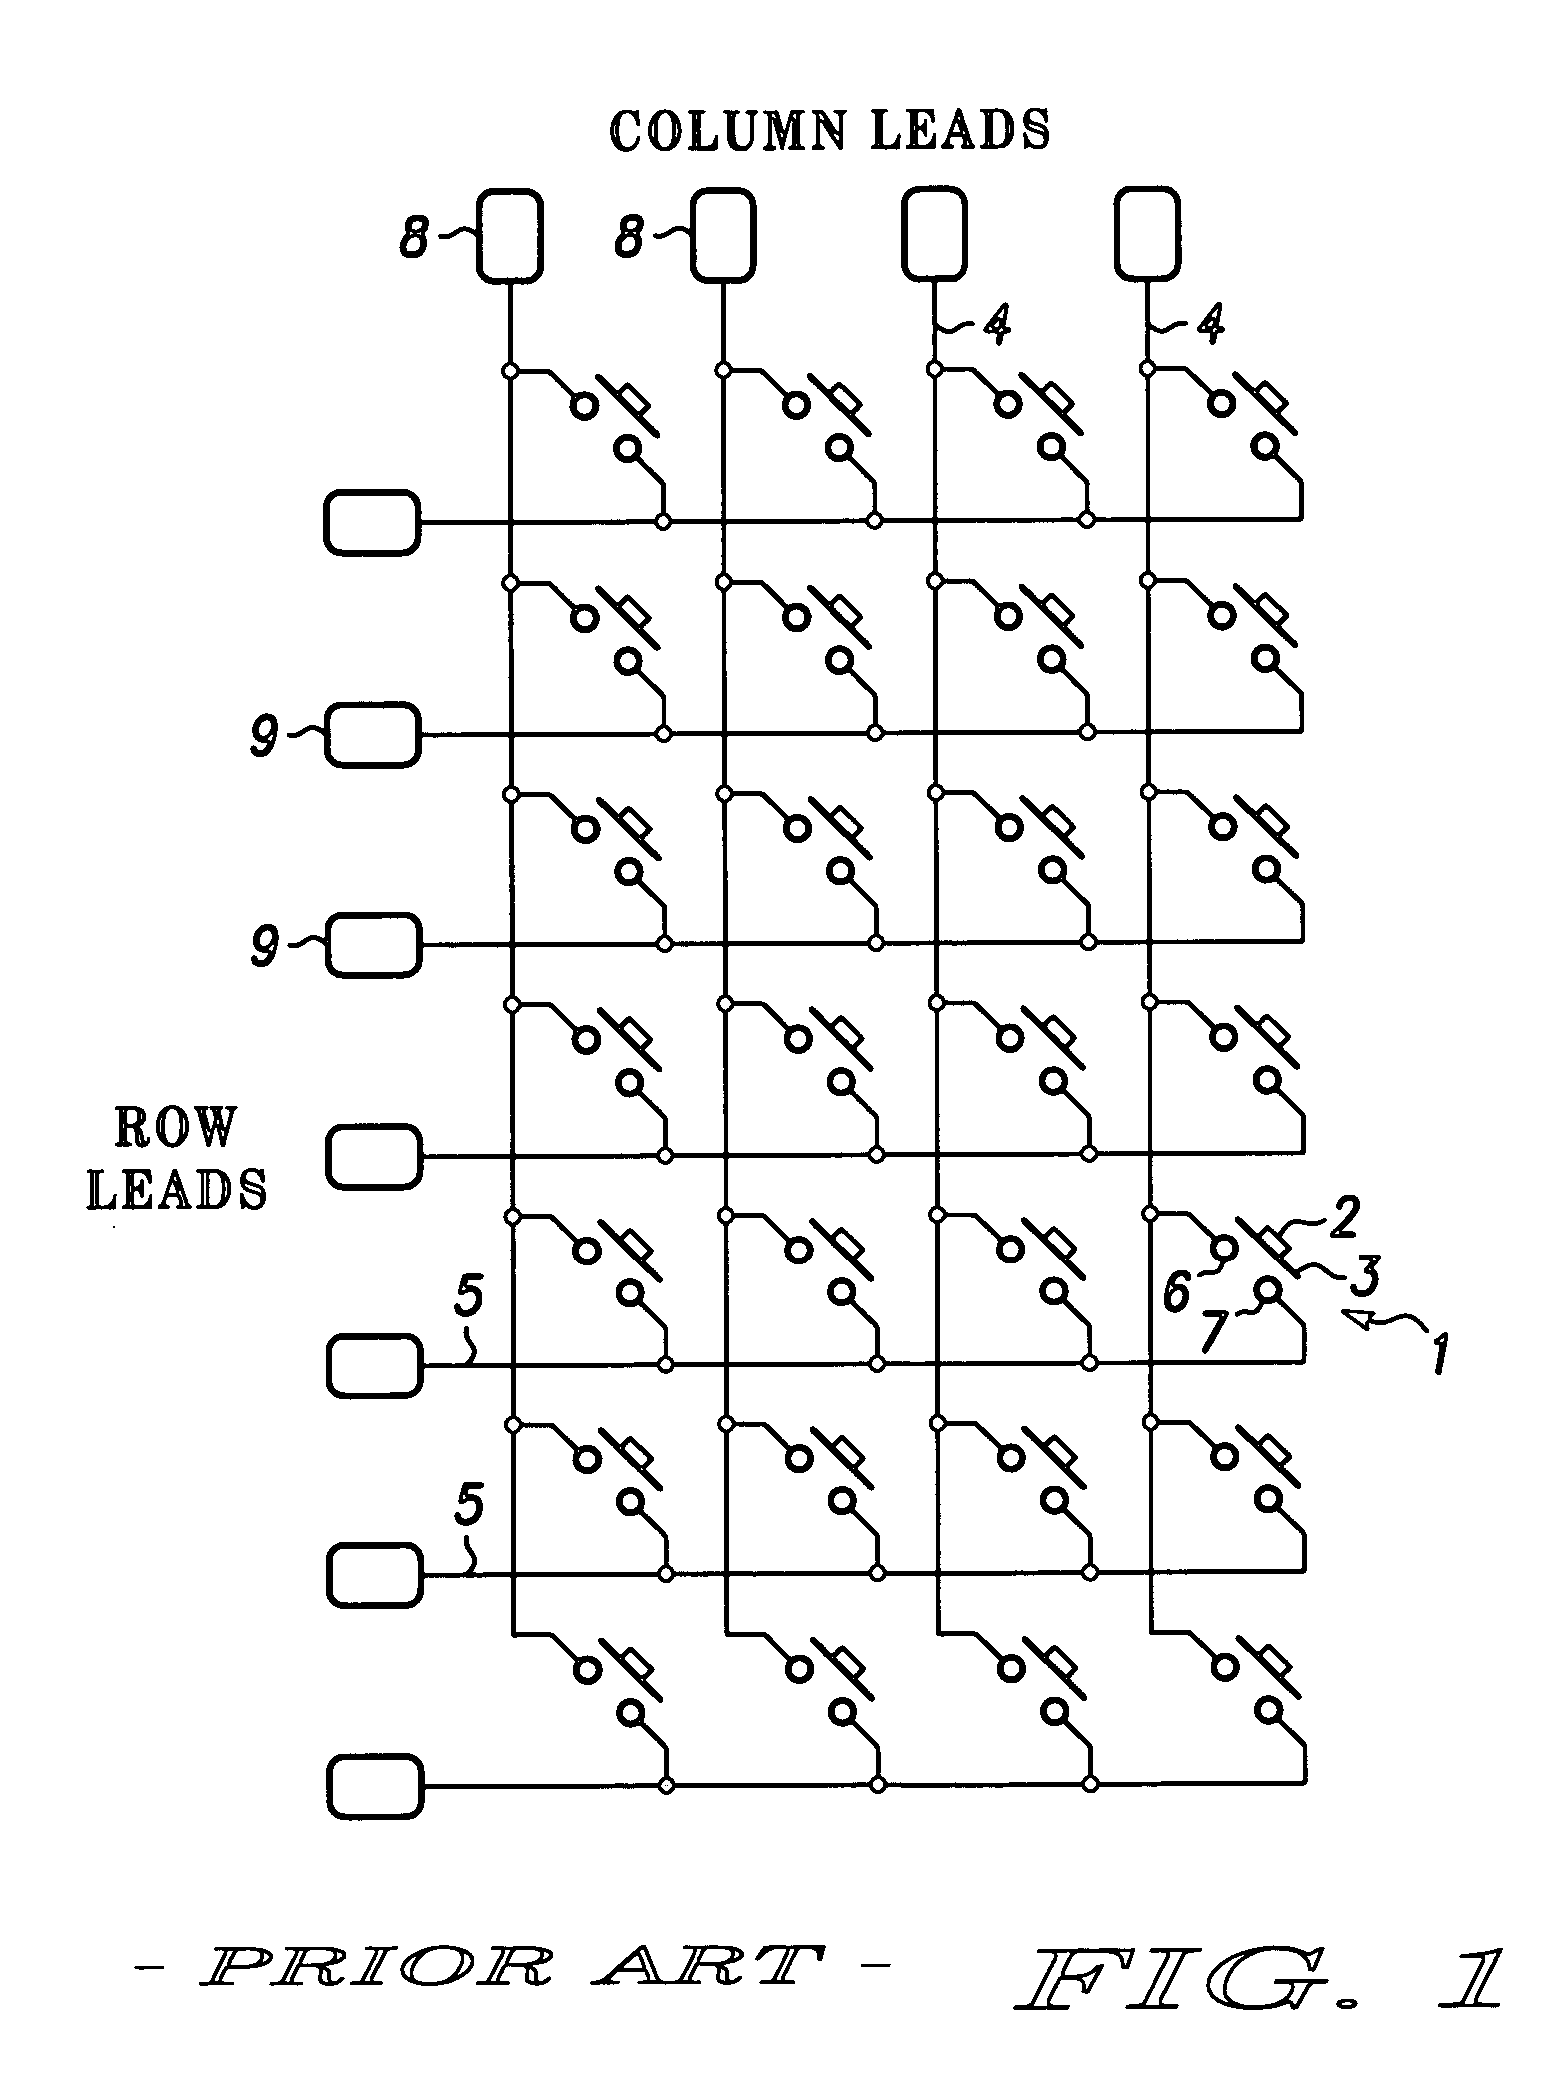 Keypad signal input apparatus